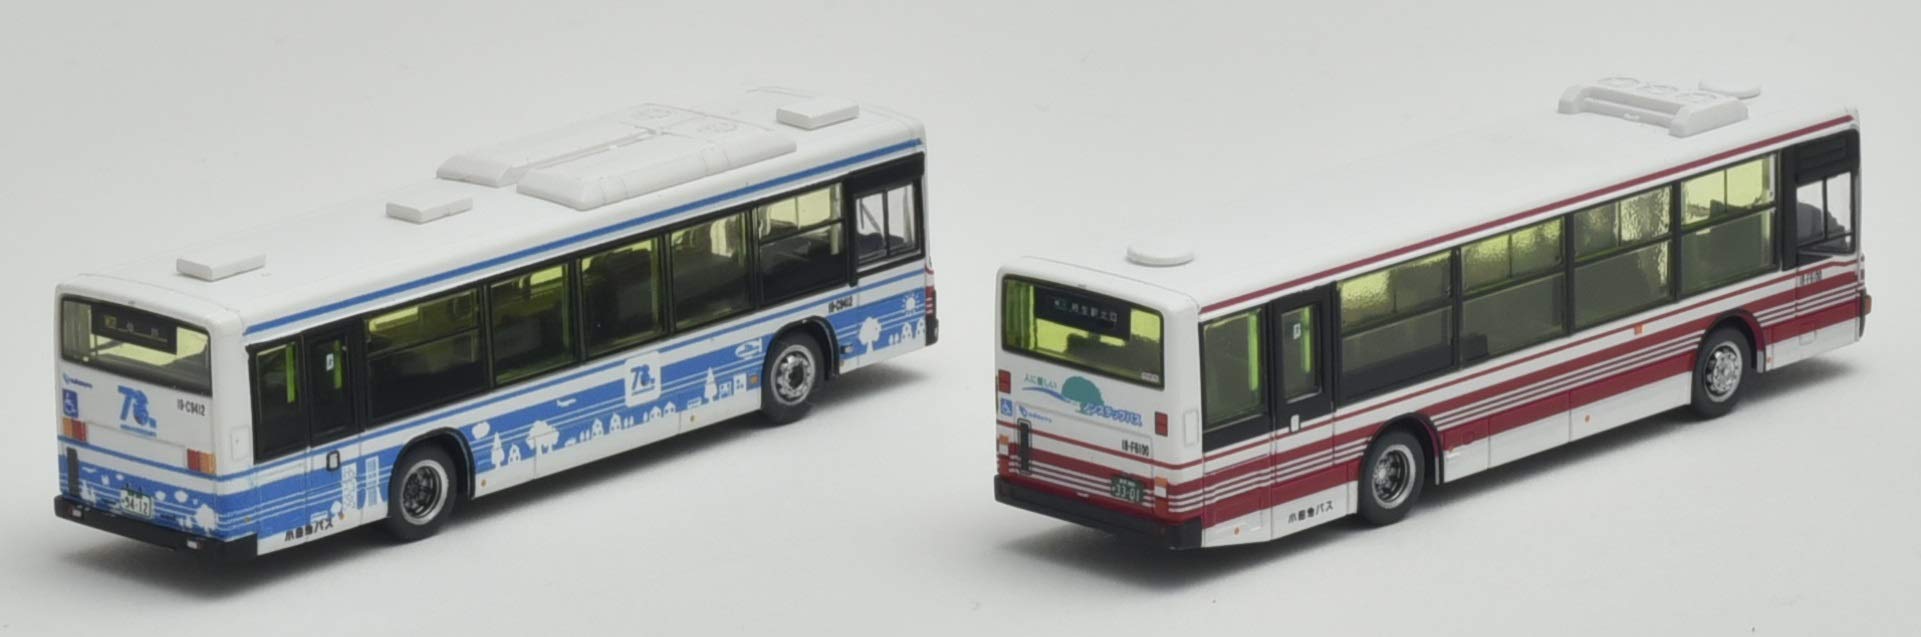 Tomytec 70th Anniversary Odakyu Bus Collection Set of 2 Diorama Supplies Limited Edition